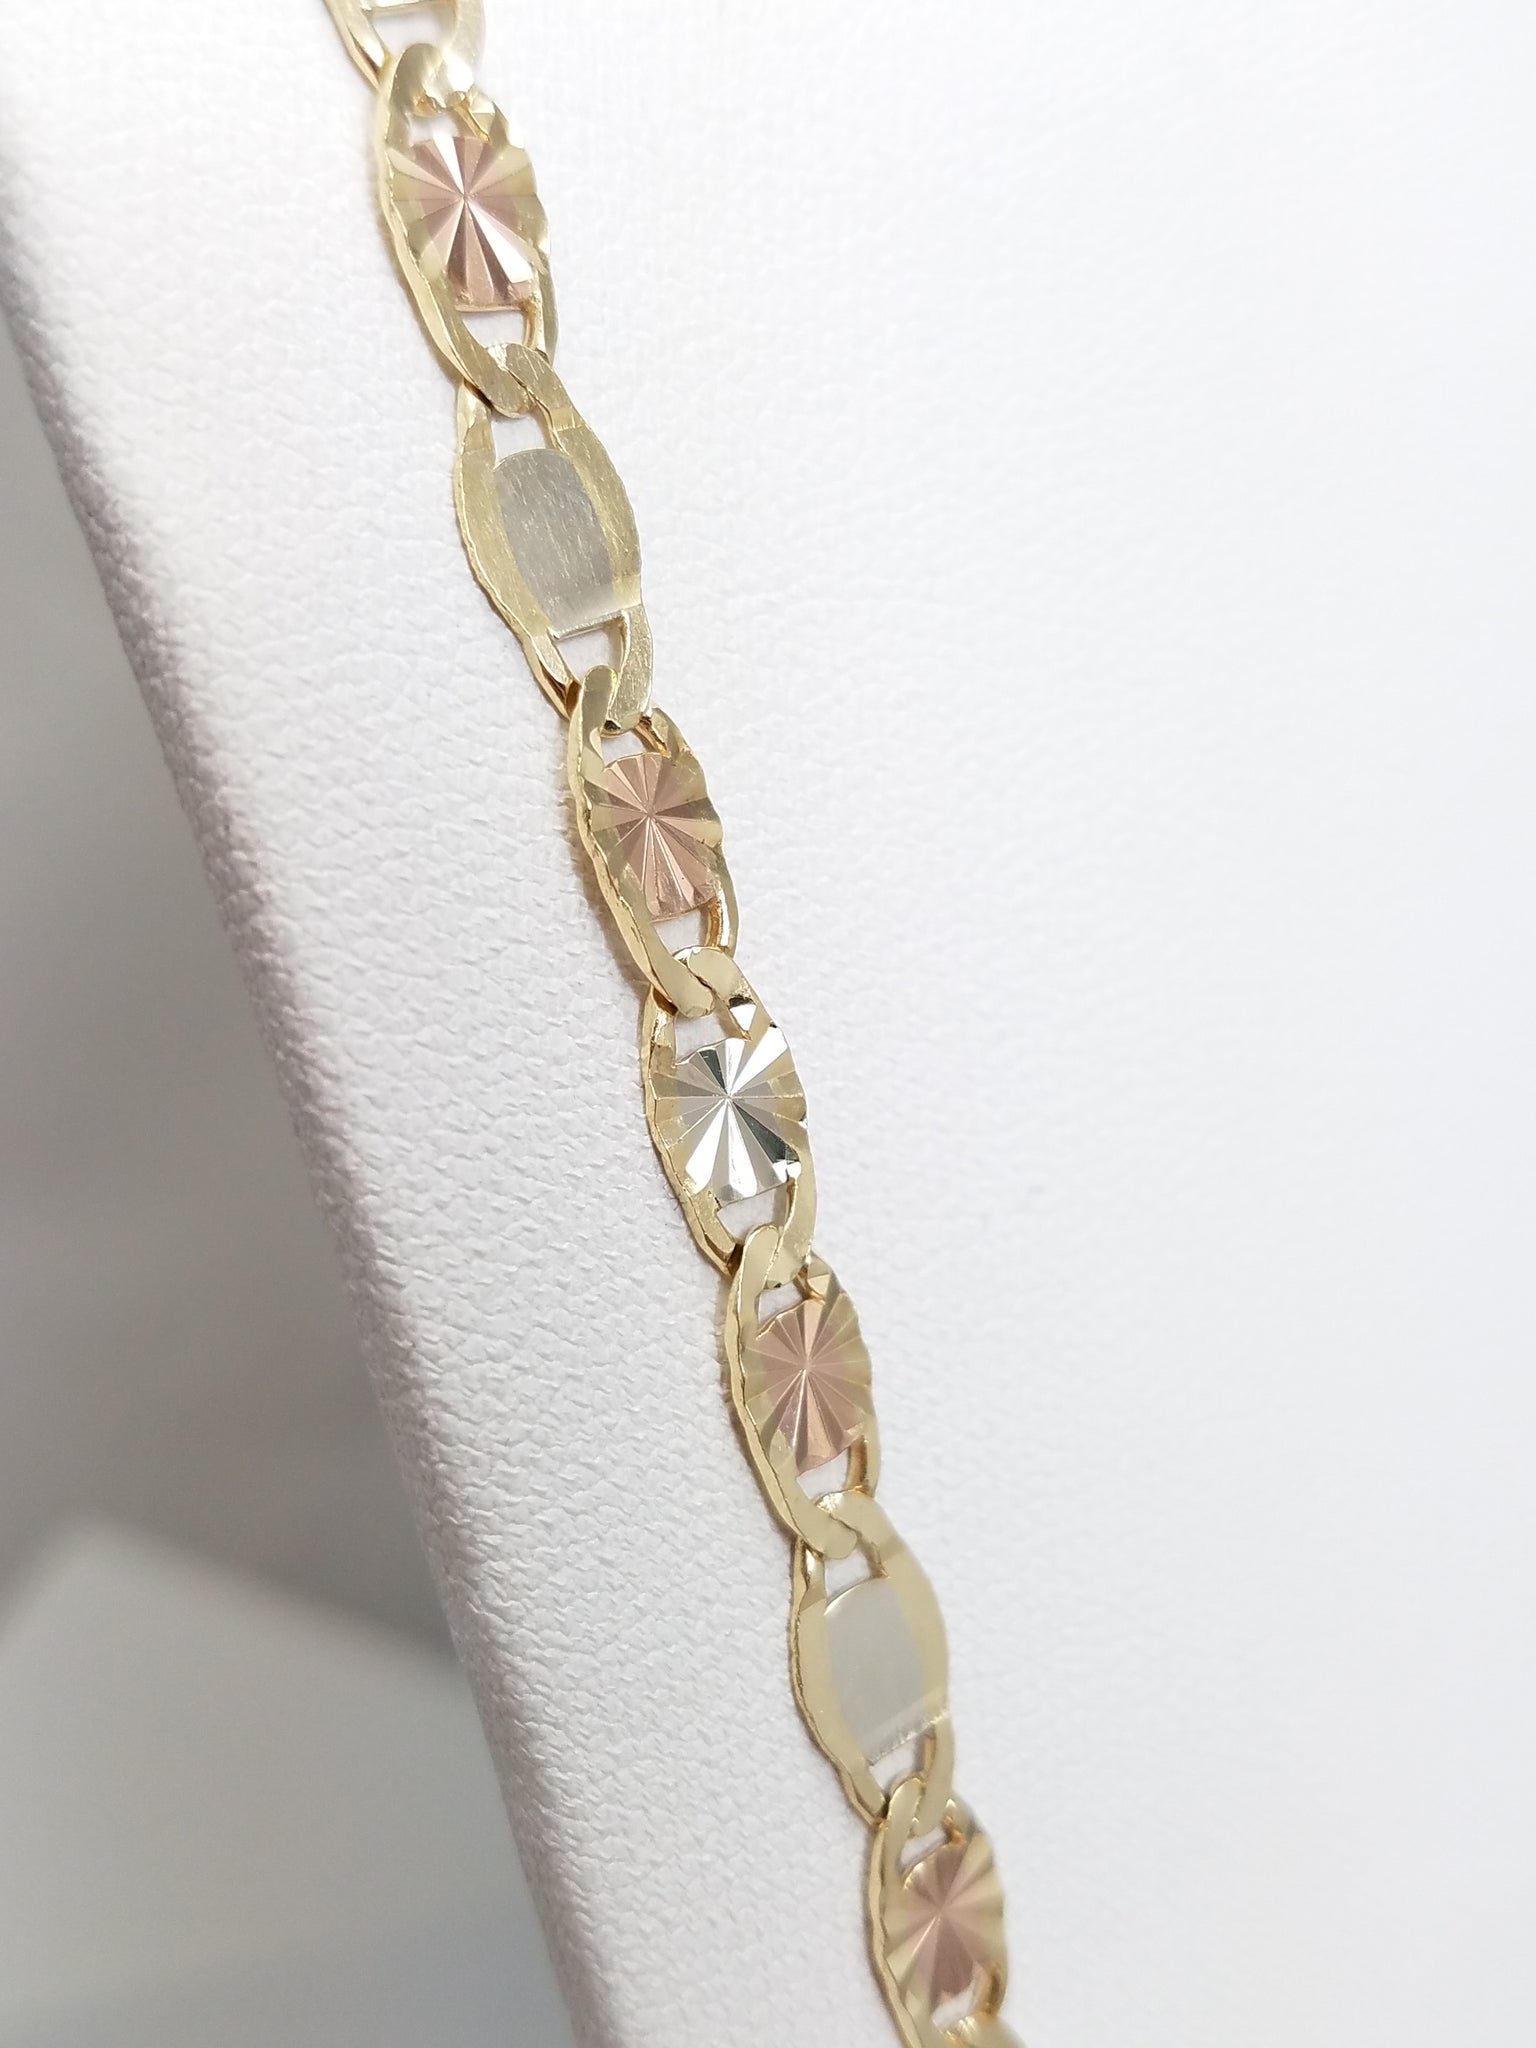 26" 14k Tri-Color Gold Diamond Cut Chain Necklace